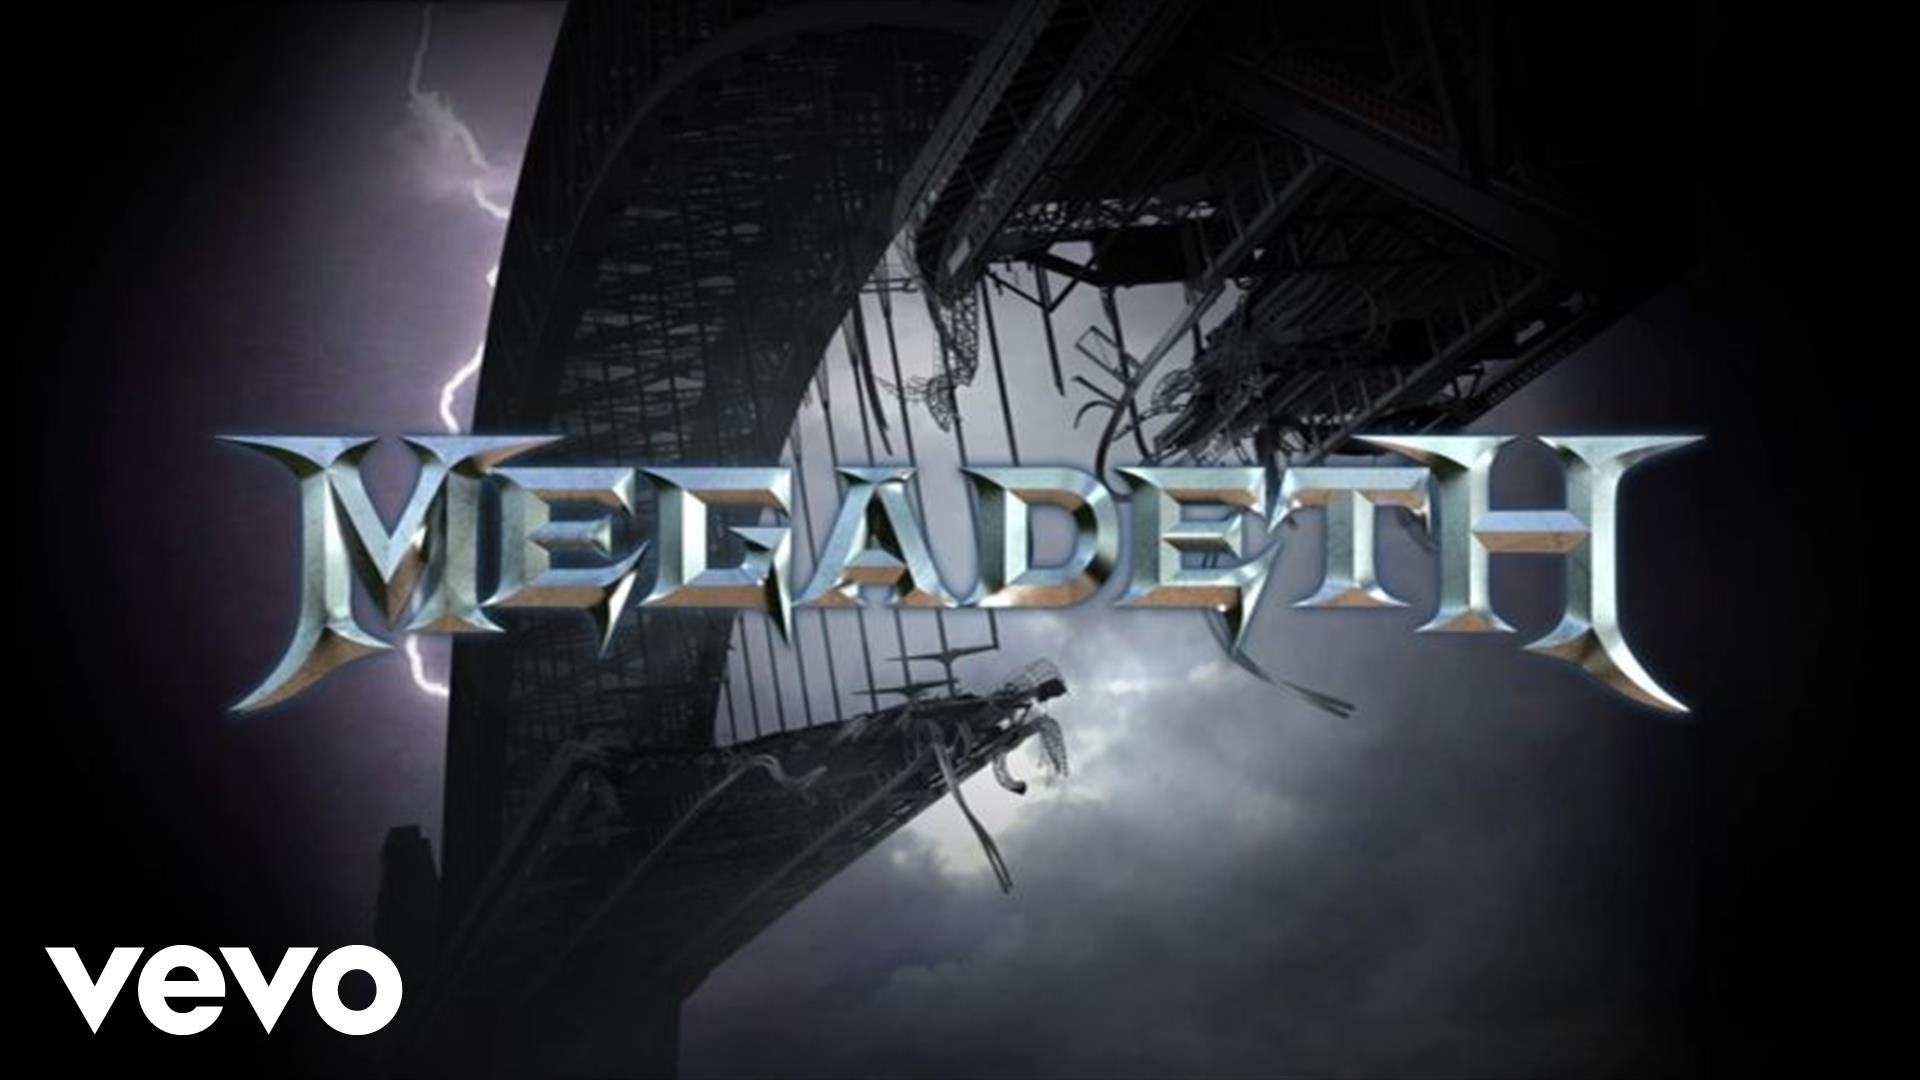 Megadeth - Fatal Illusion